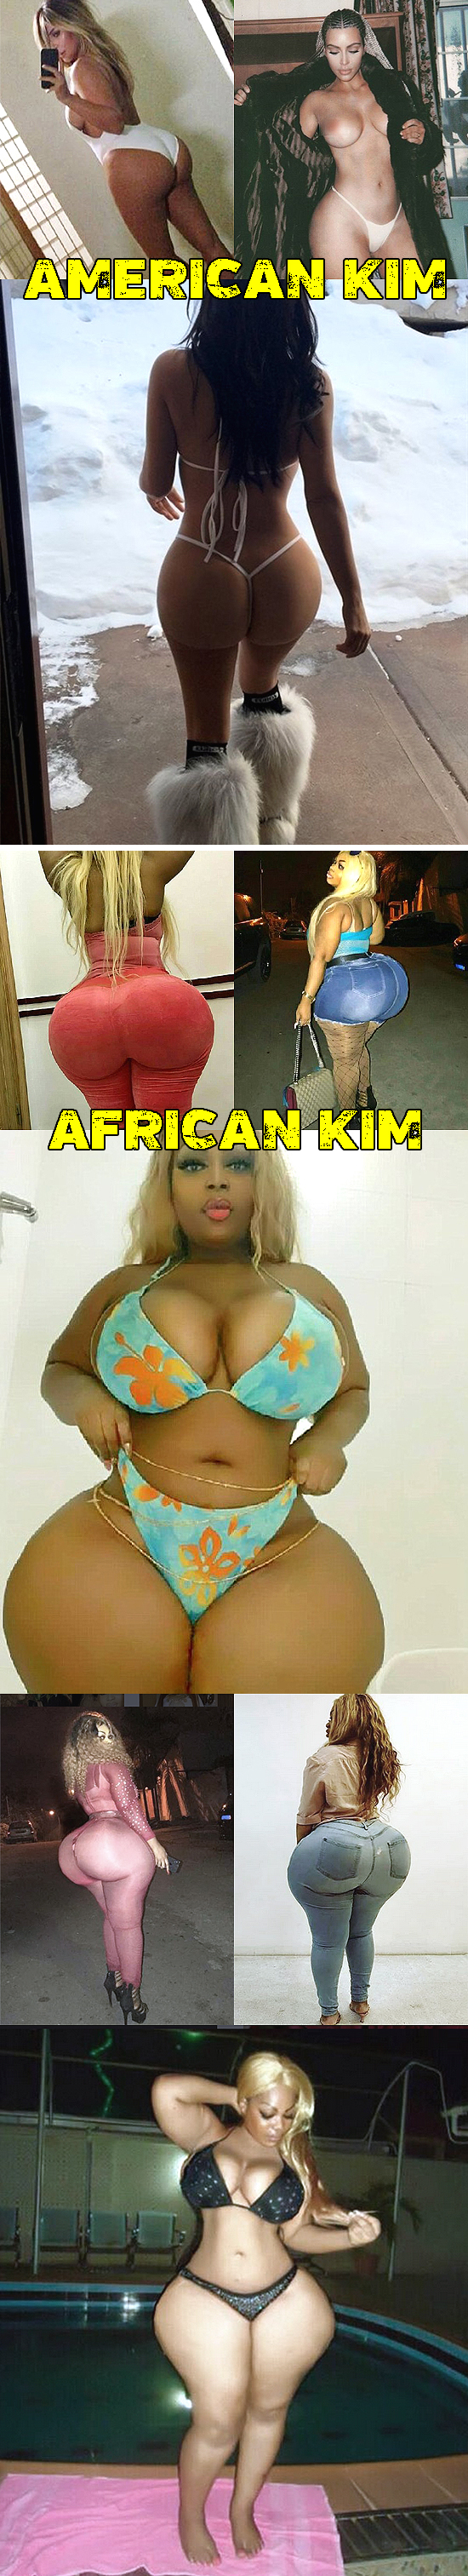 THE 'KIM KARDASHIAN OF AFRICA" SWEARS SHE'S ALL NATURAL